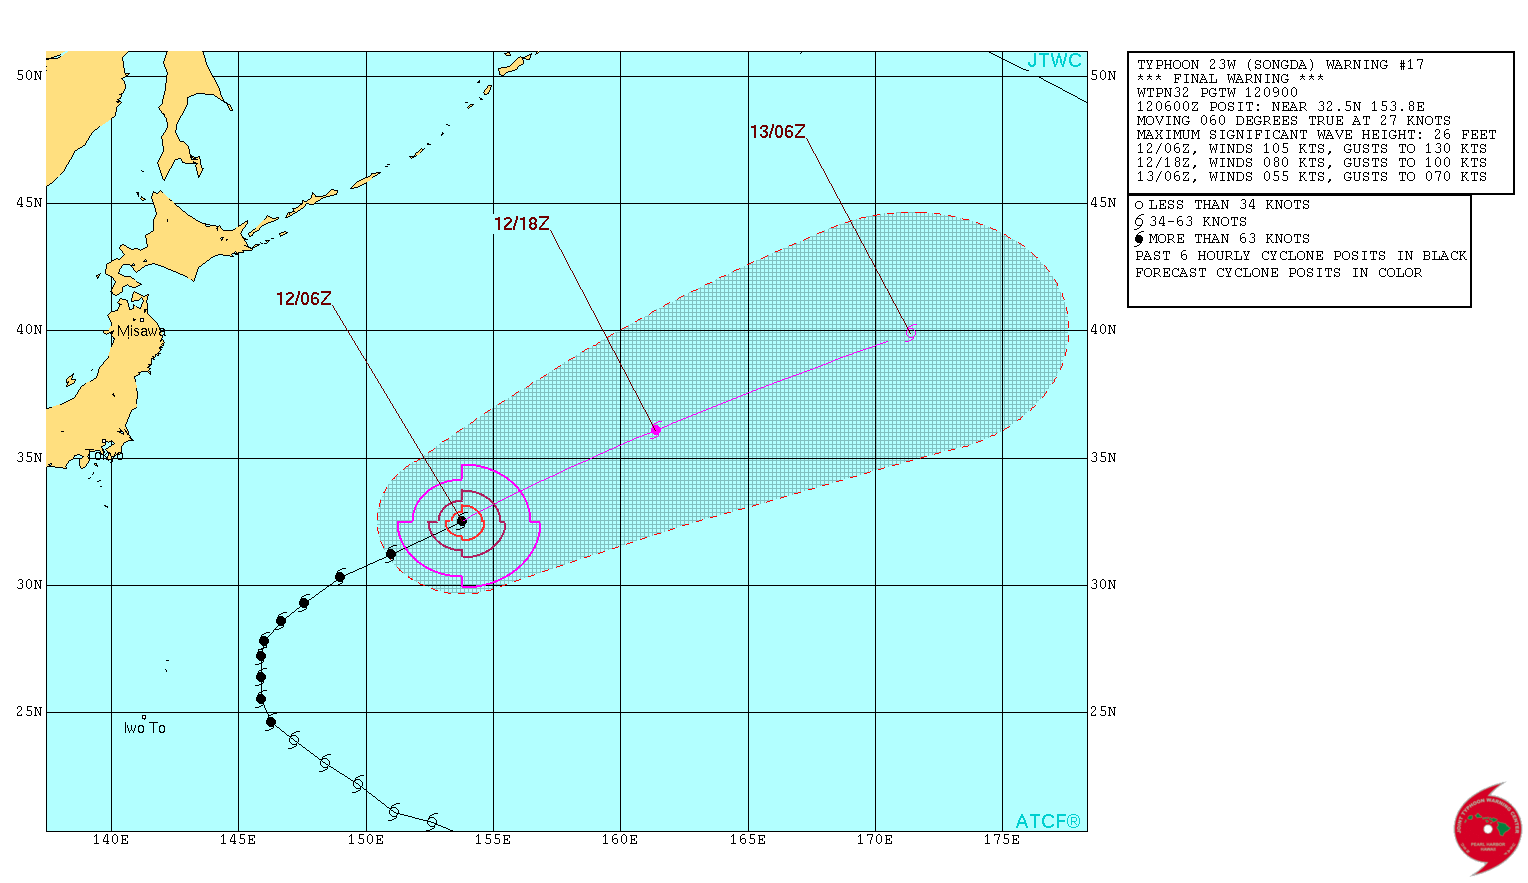 Typhoon Songda 24-hour forecast track. Image credit: JTWC